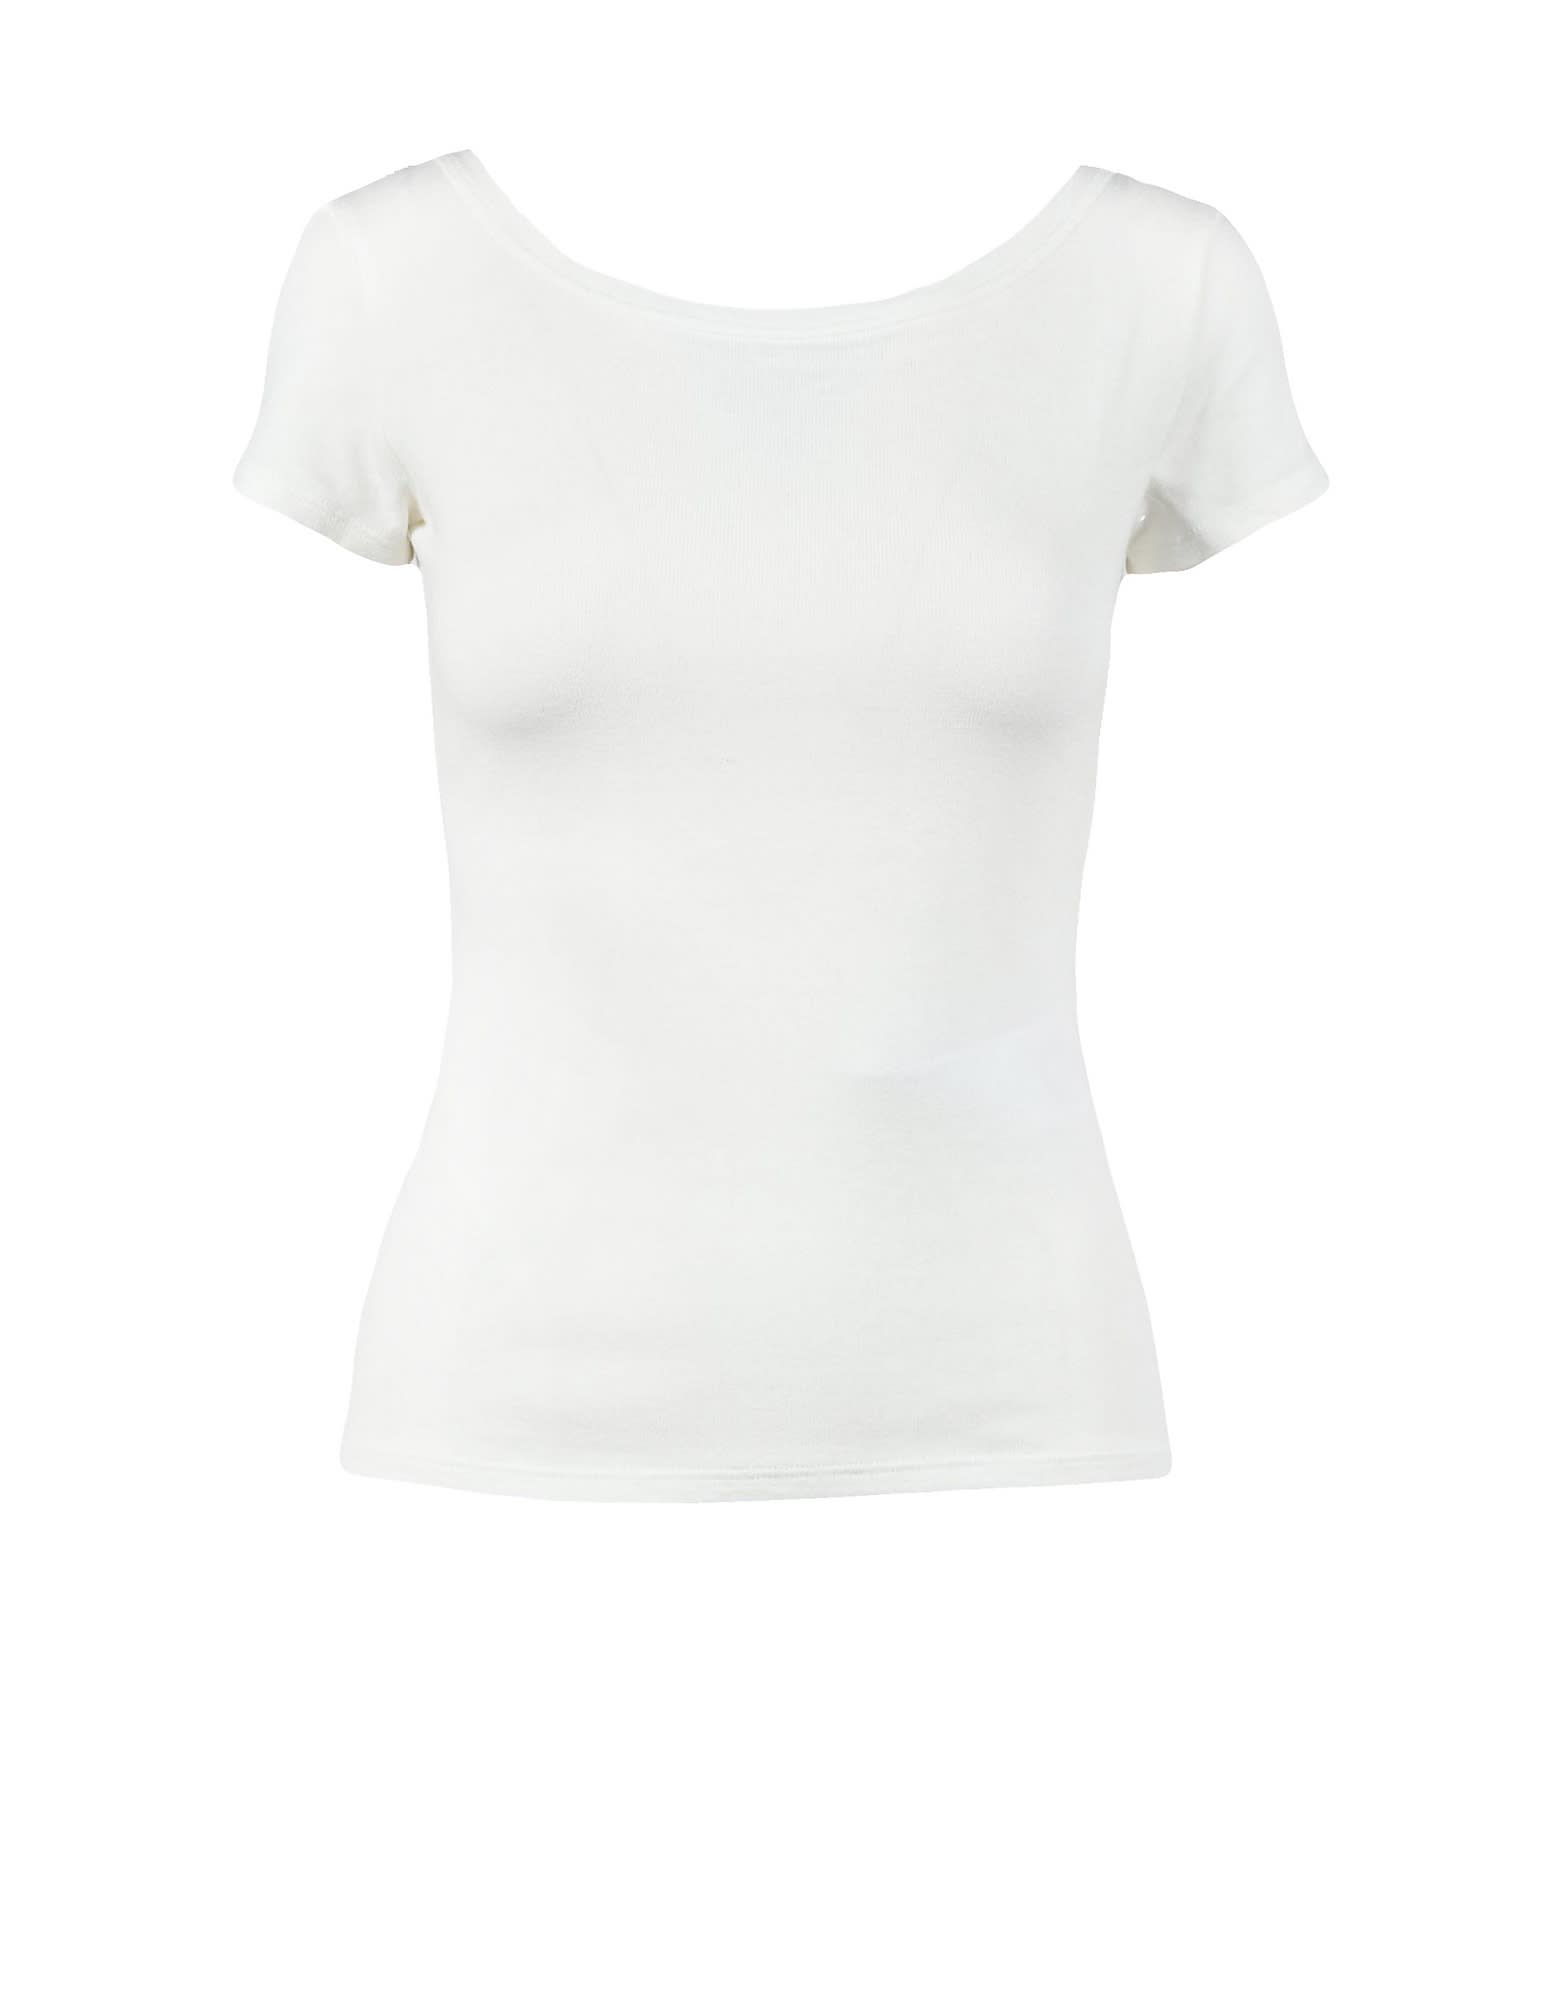 Max & Co. Womens White Top - White - female - Size: Medium